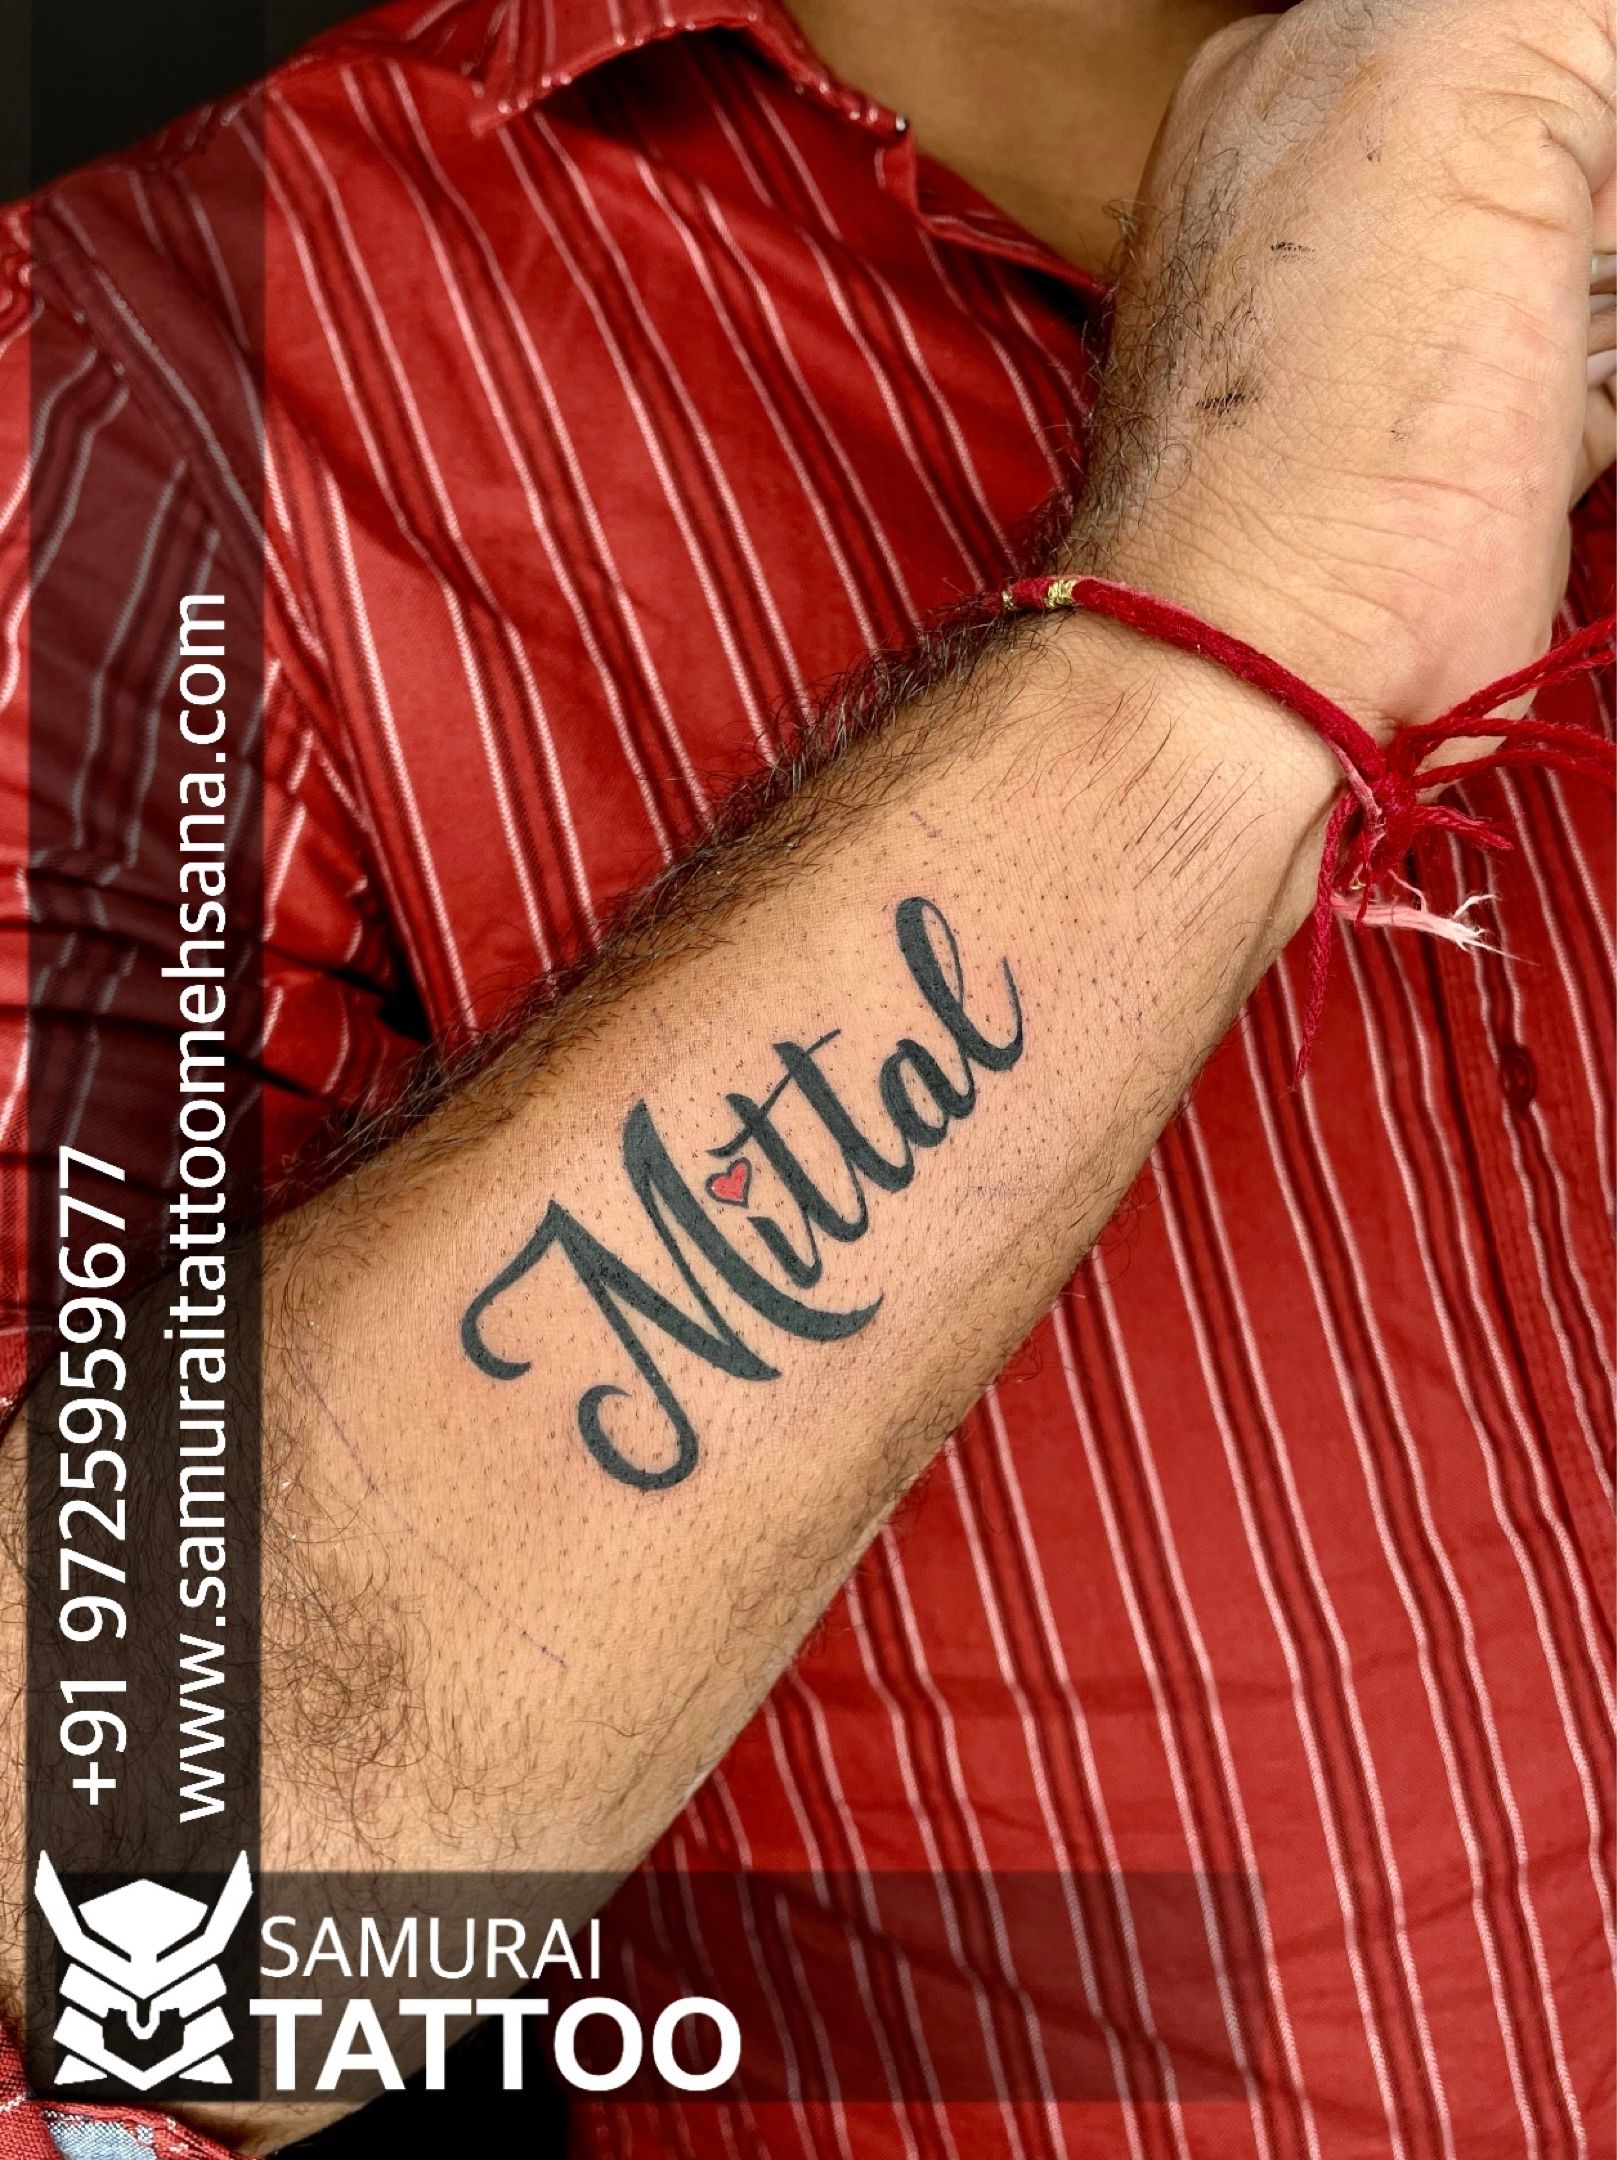 Aggregate 65 about shivansh name tattoo latest  indaotaonec